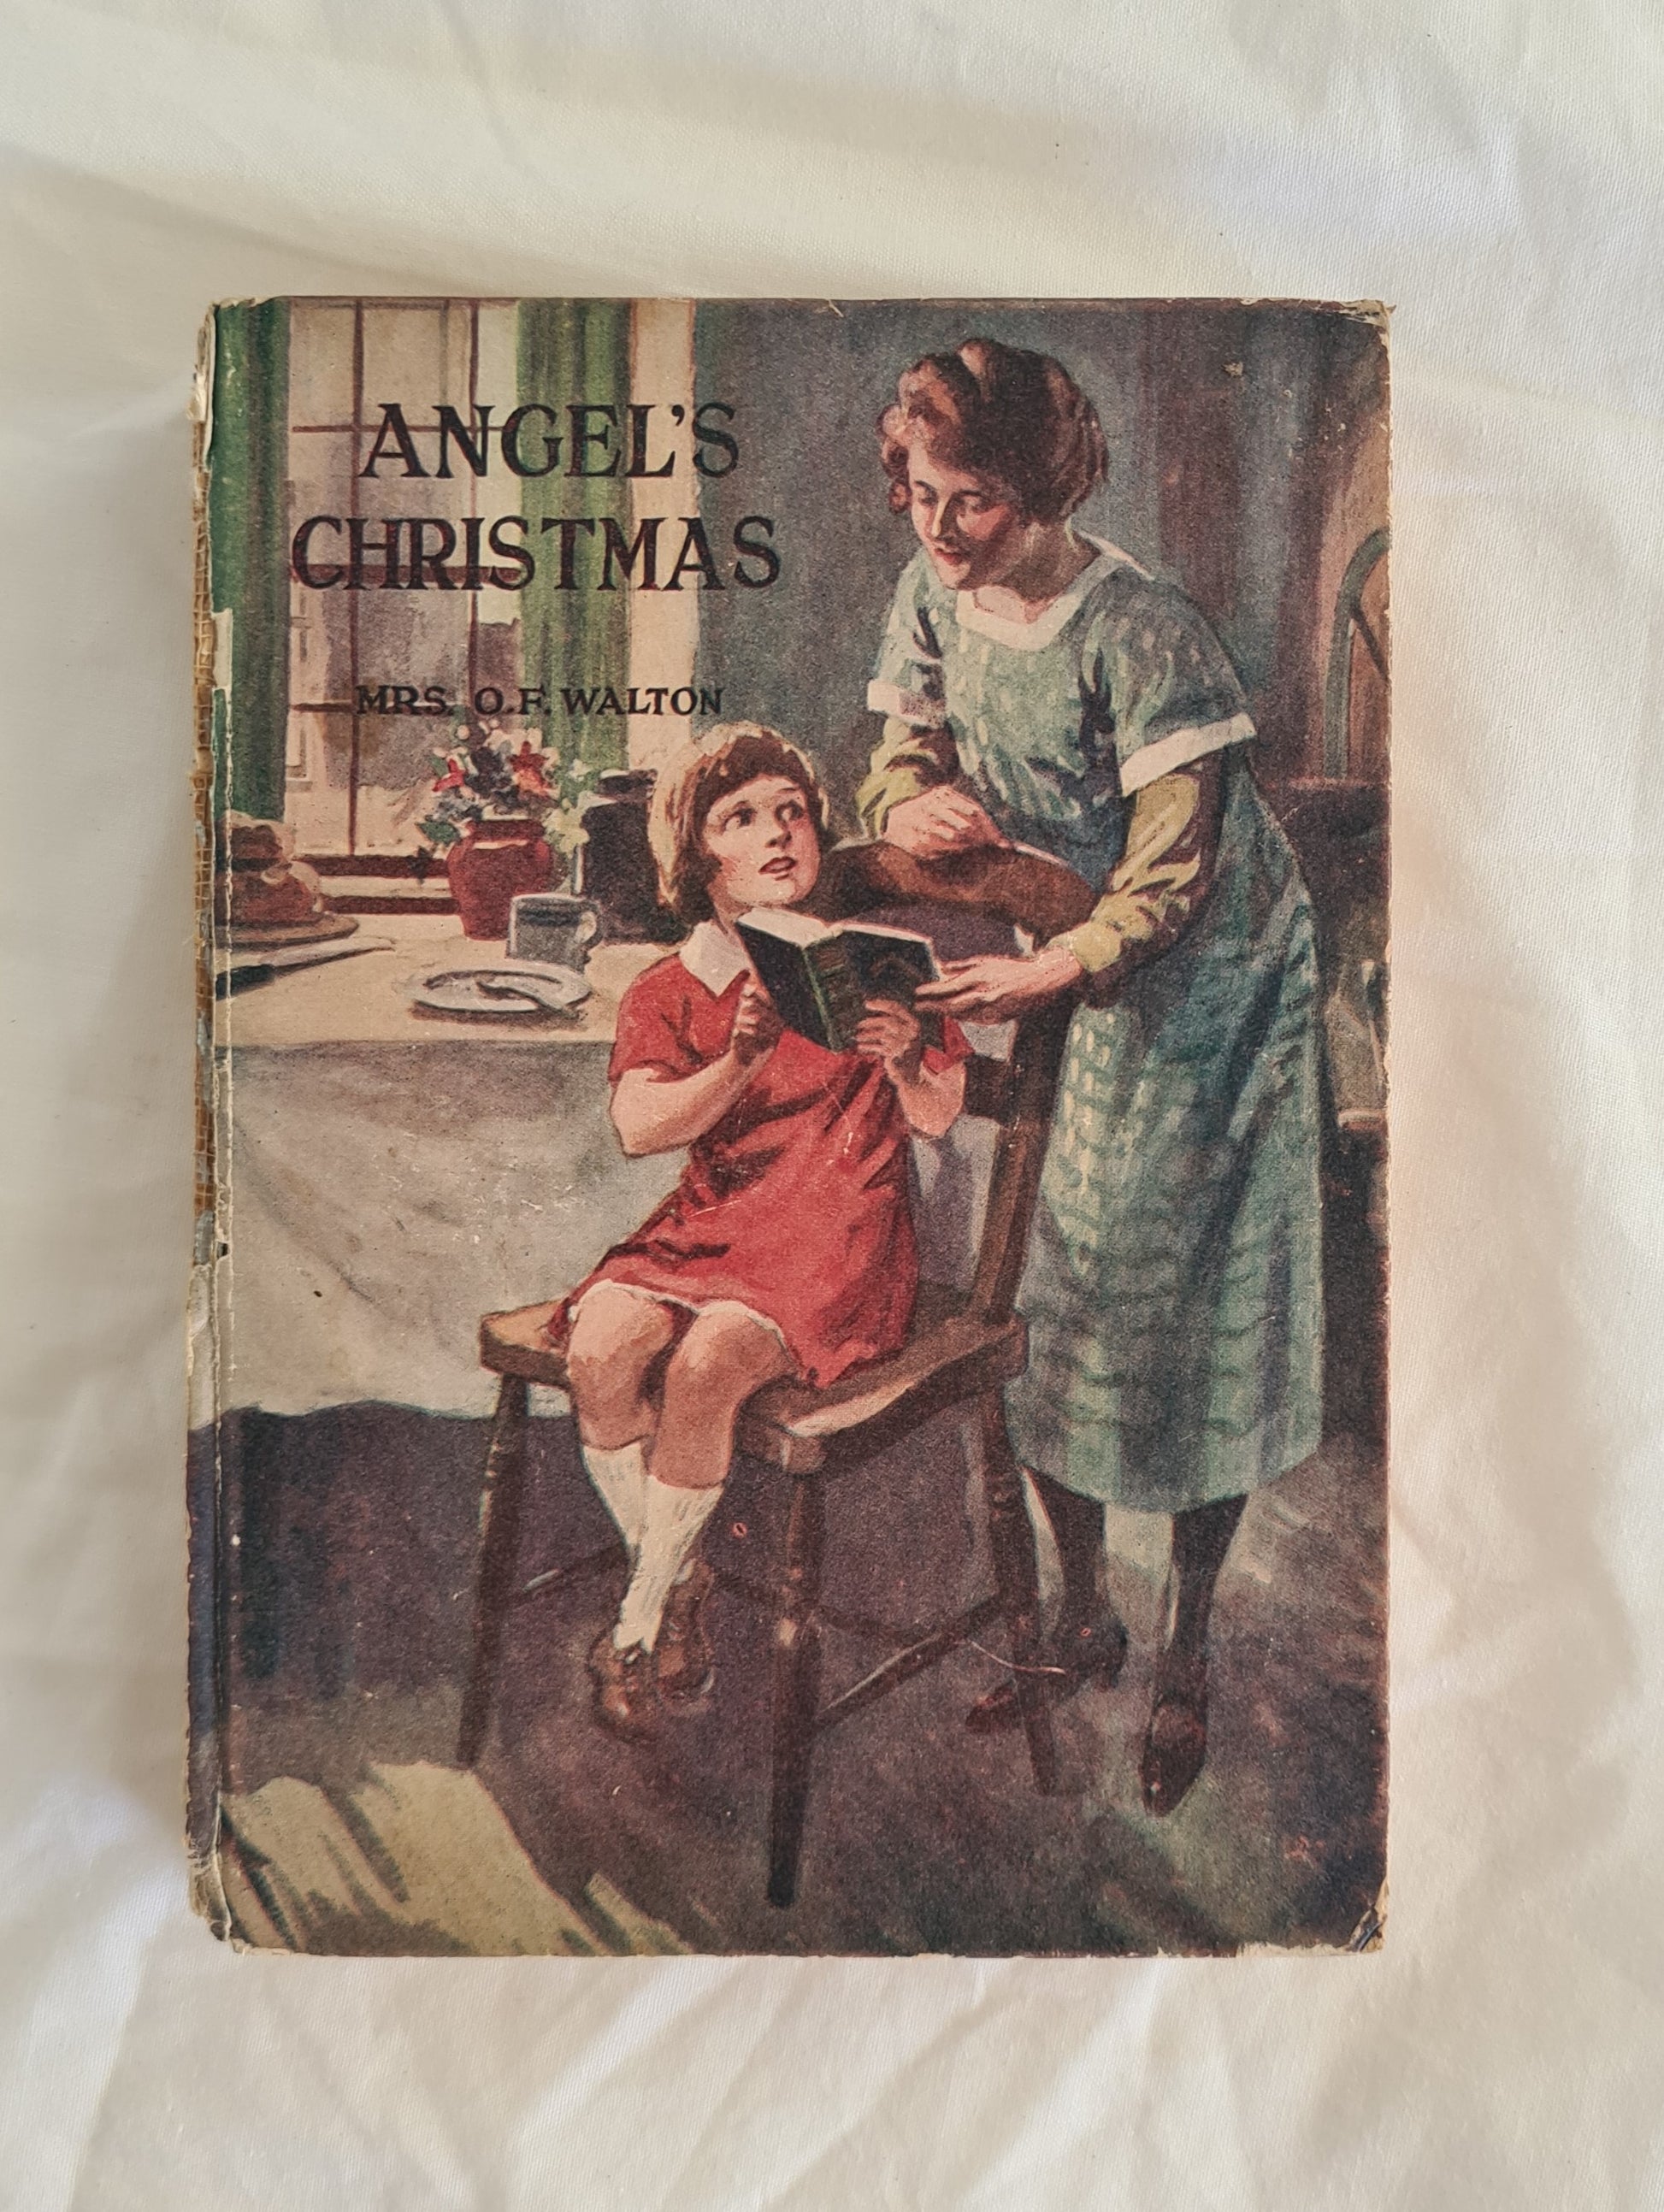 Angel’s Christmas by Mrs. O. F. Walton